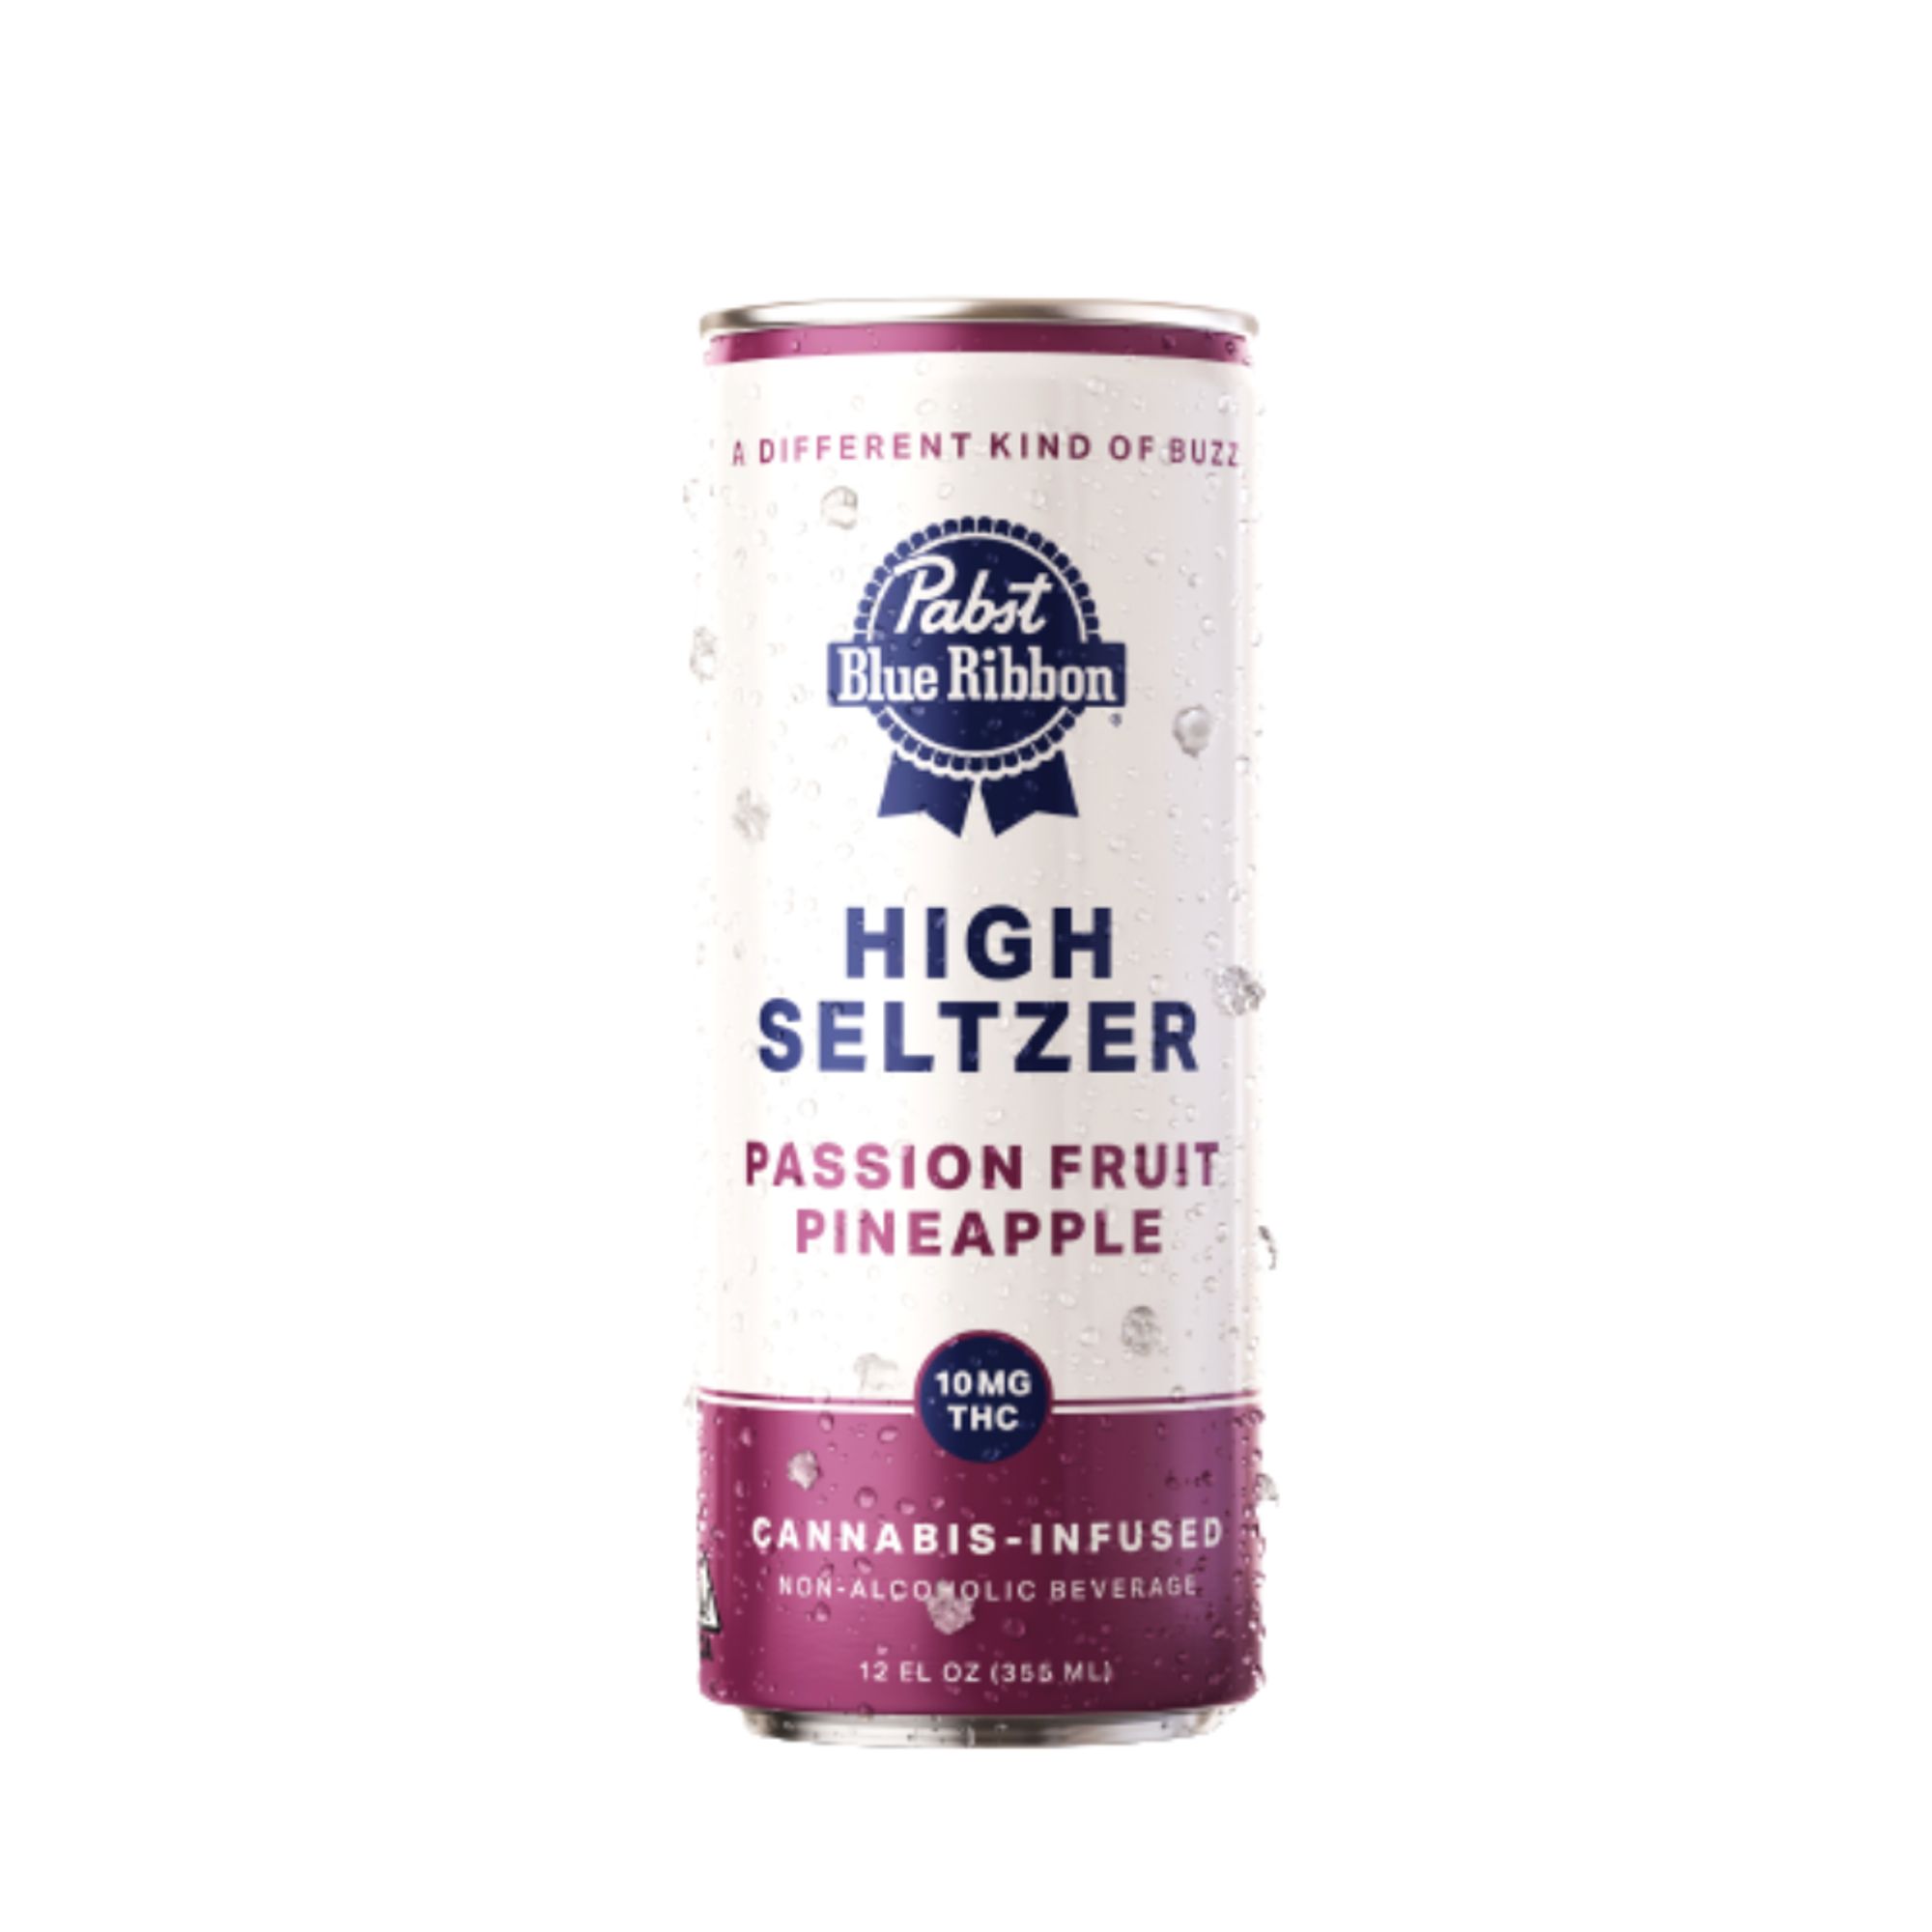 PBR High Seltzer Passion Fruit Pineapple